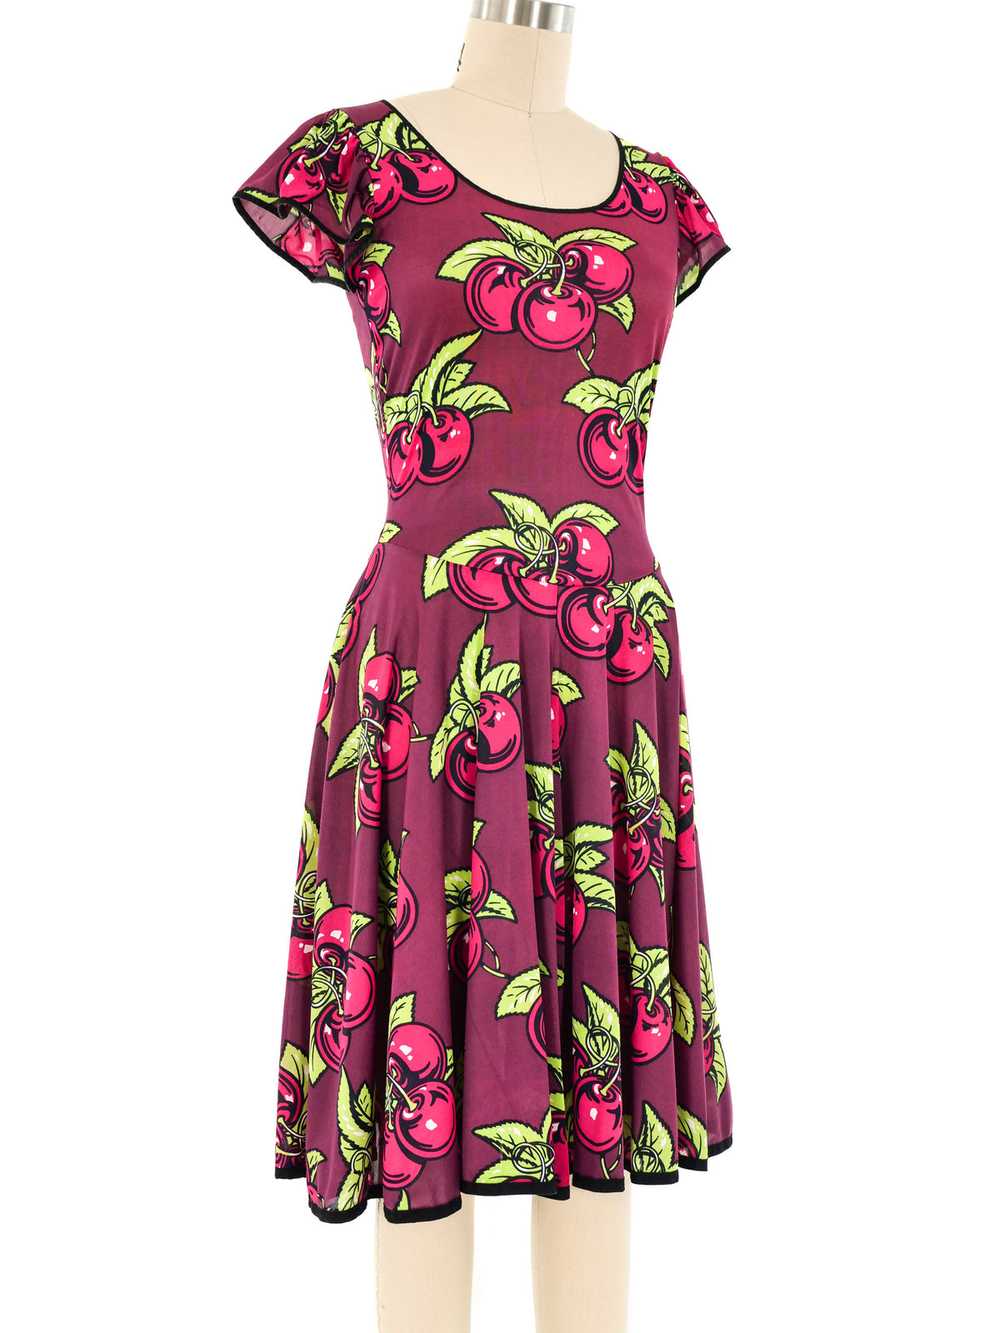 Betsey Johnson Alley Cat Cherry Print Dress - image 3